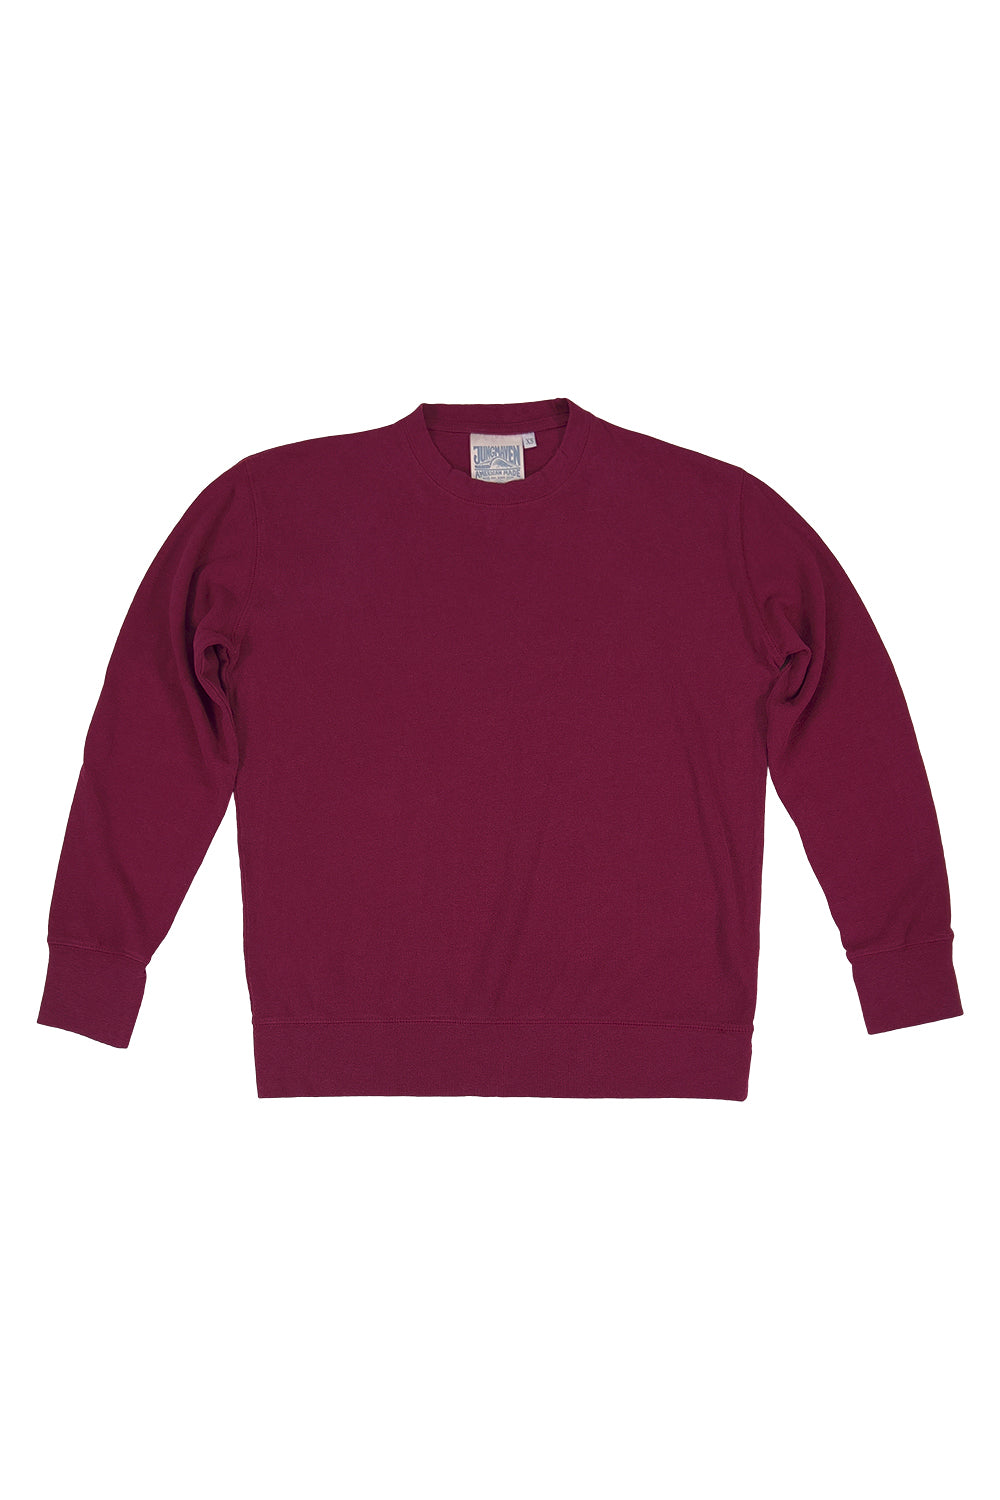 California Pullover | Jungmaven Hemp Clothing & Accessories / Color: Burgundy 